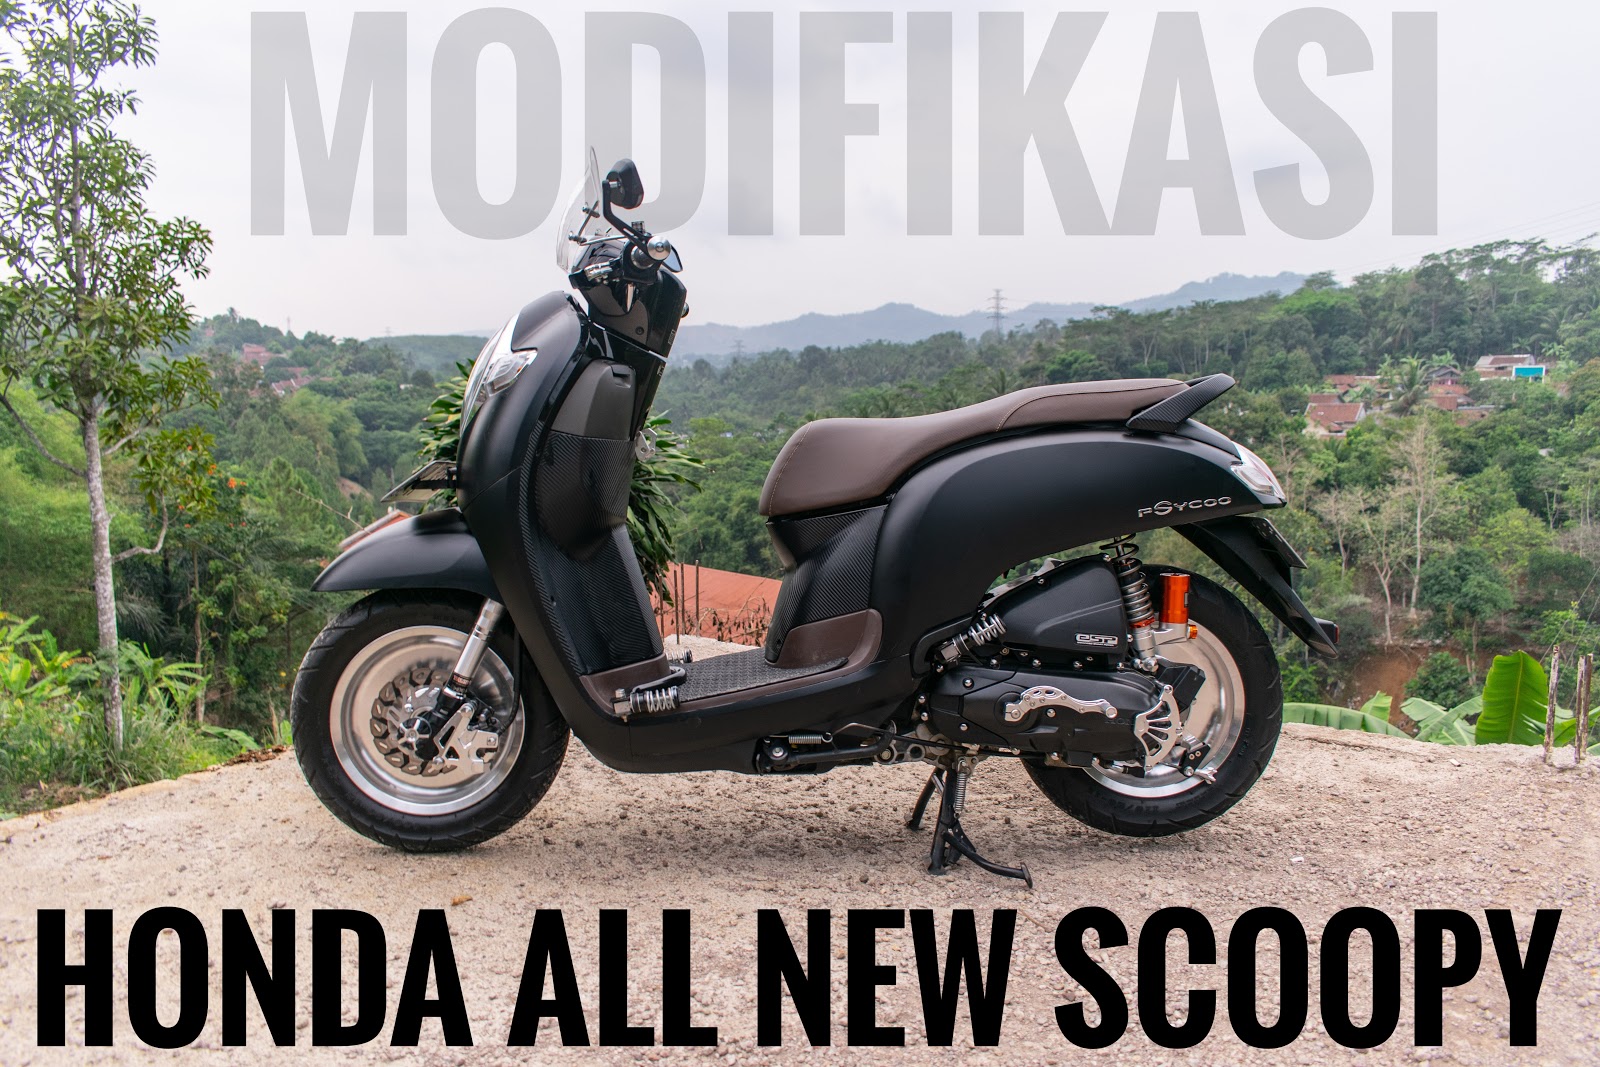 Modifikasi Honda All New Scoopy 2017 Psycoo Dirasapblog